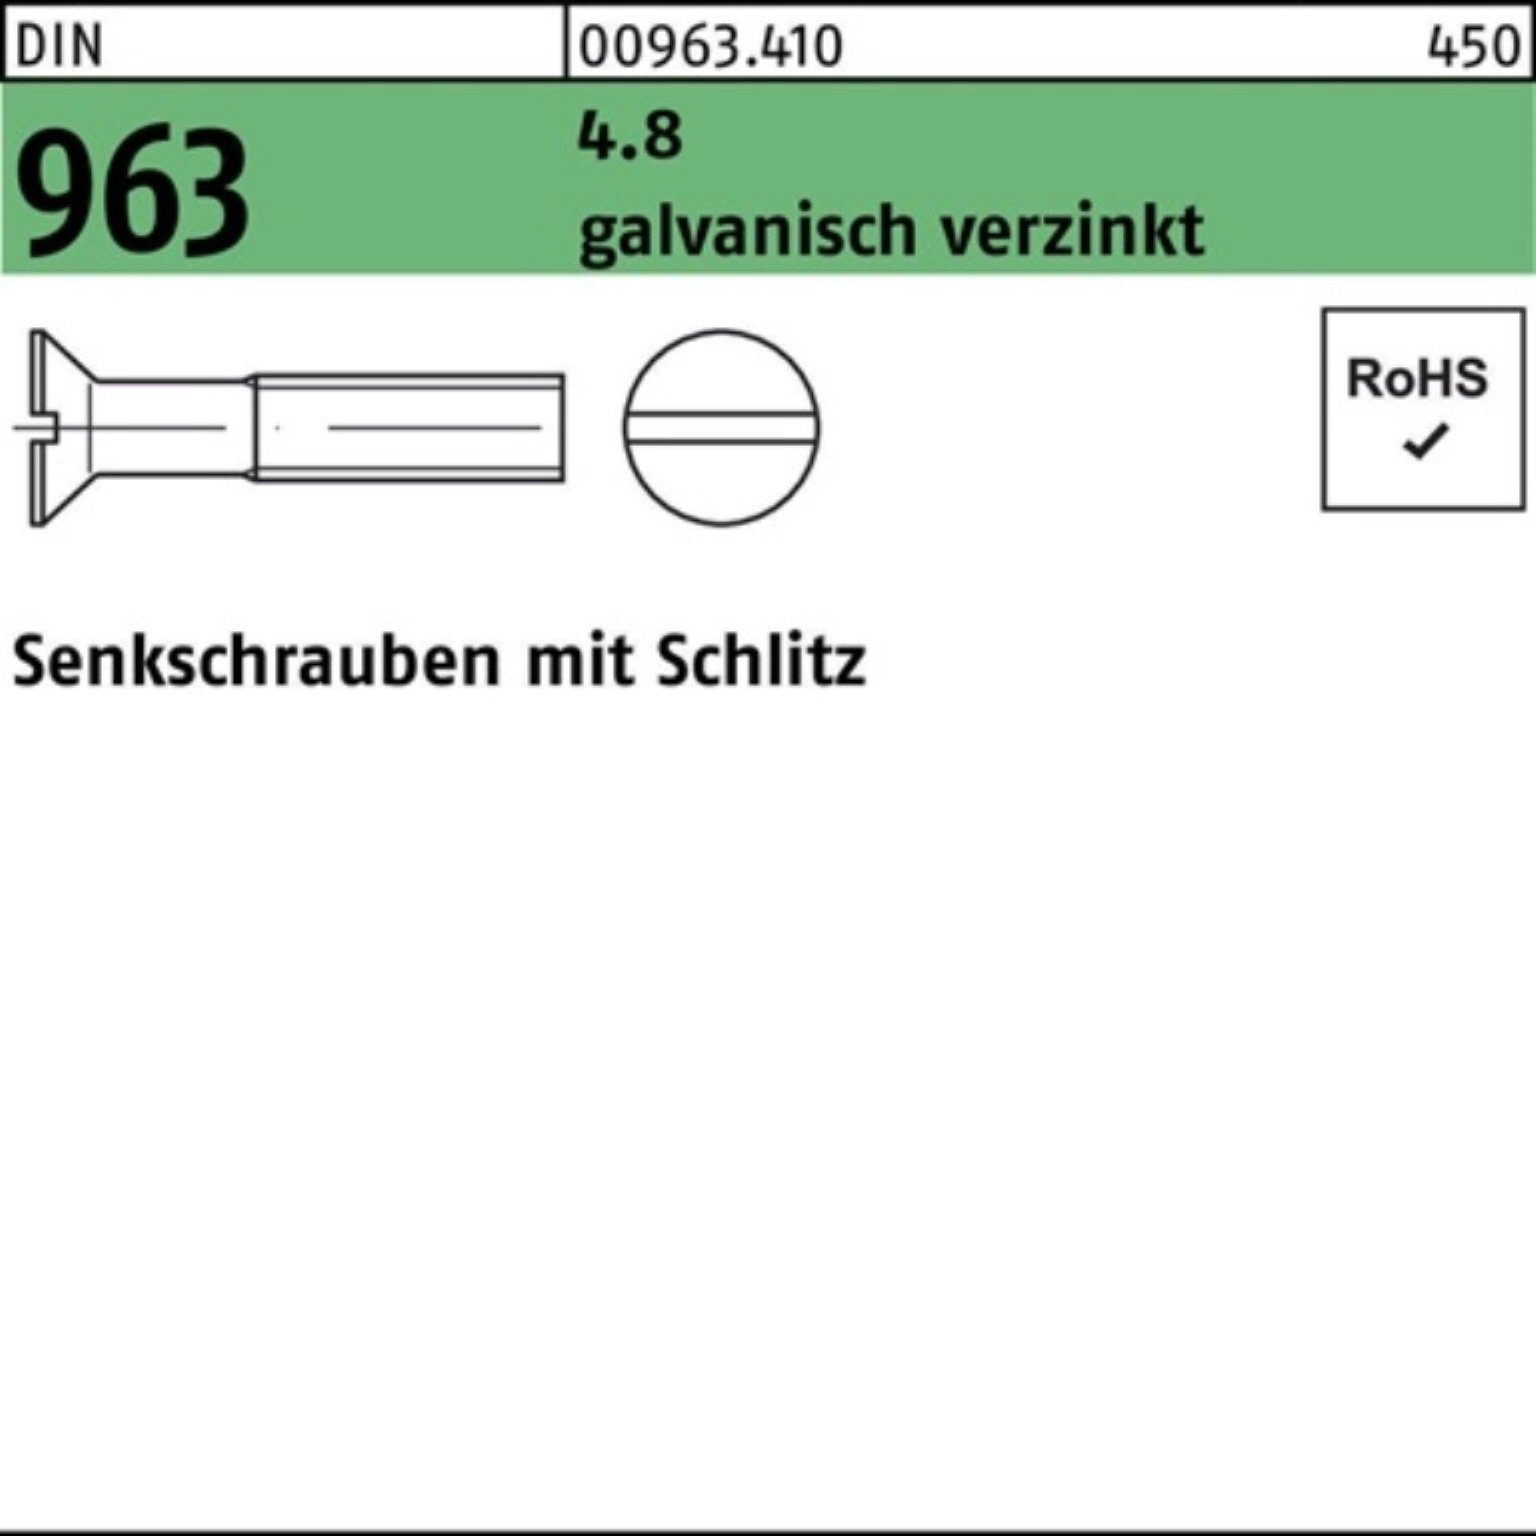 Reyher Senkschraube 100er Pack Senkschraube DIN 963 Schlitz M8x 80 4.8 galv.verz. 100 Stü